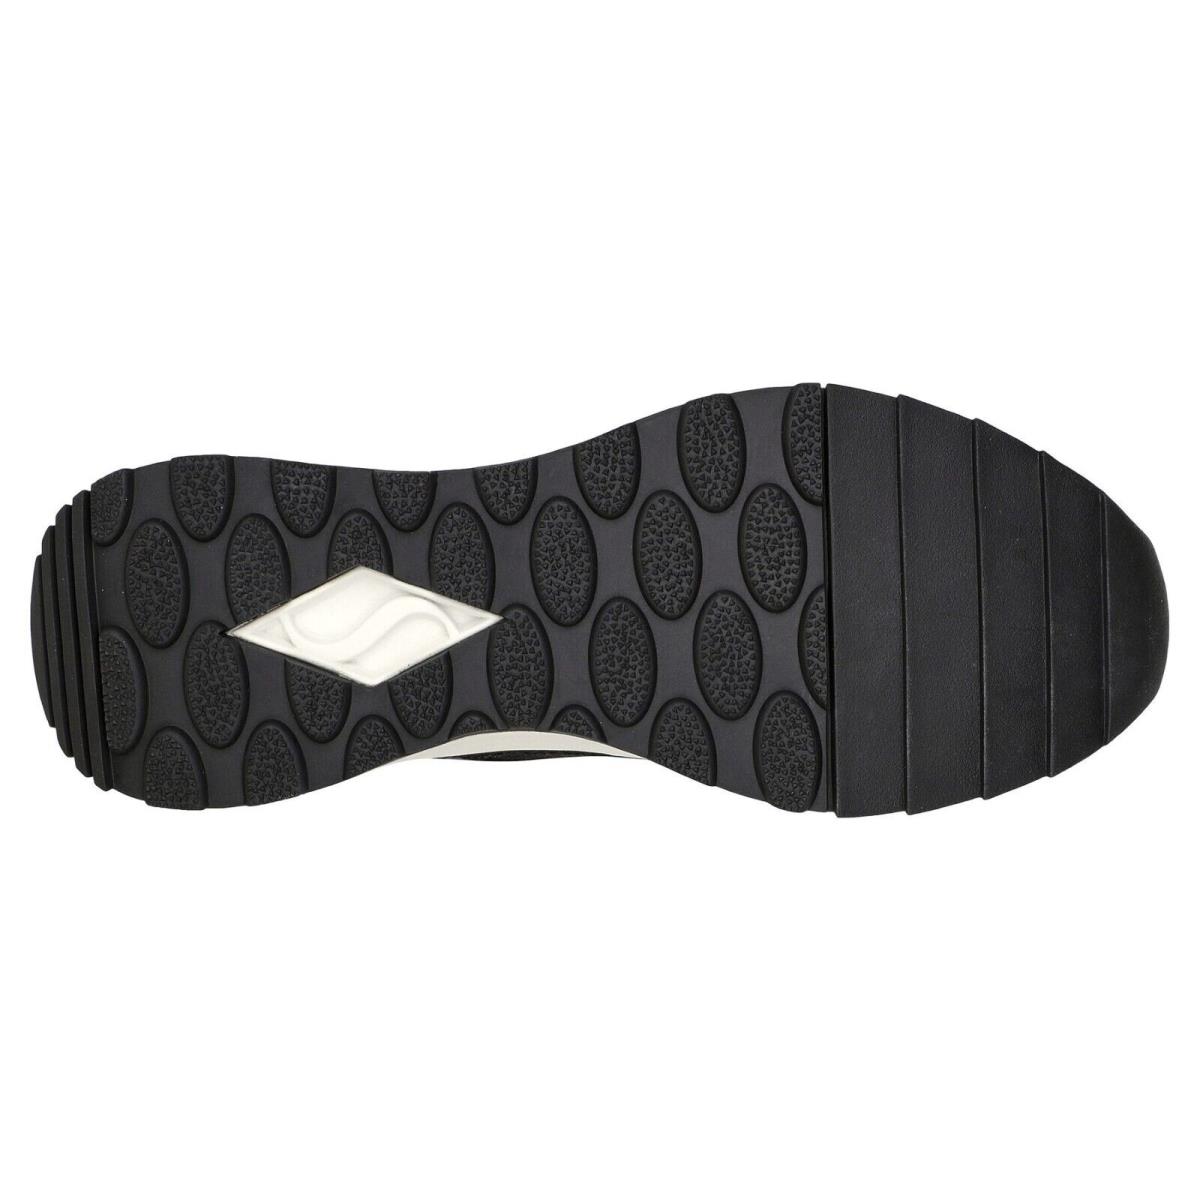 Skechers shoes Sunny Street - Black 6